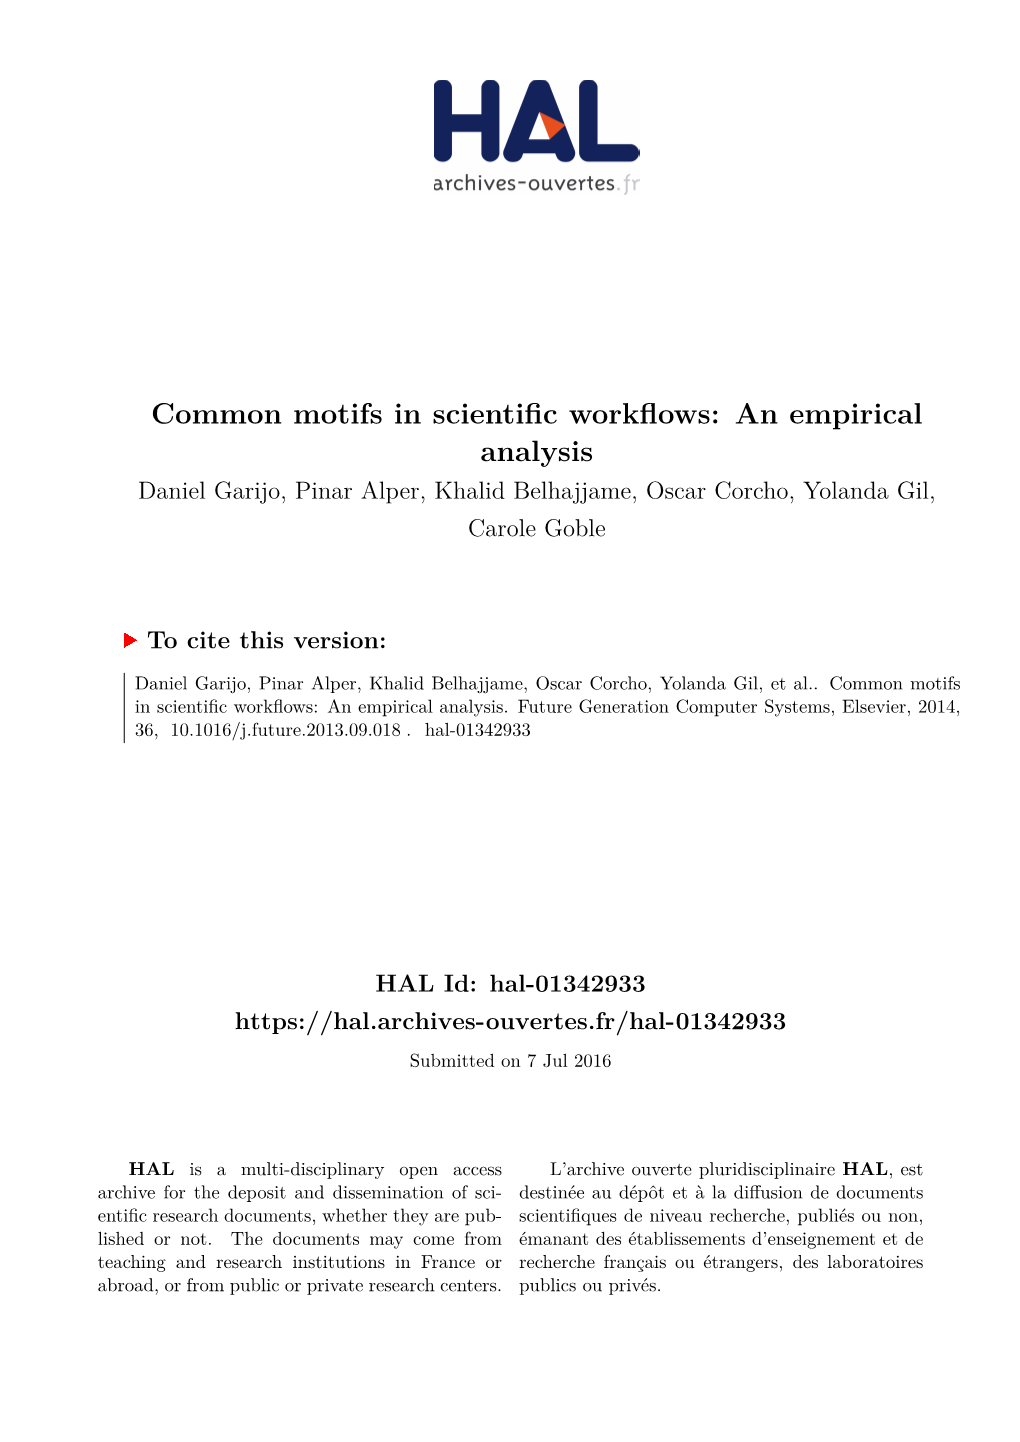 Common Motifs in Scientific Workflows: an Empirical Analysis Daniel Garijo, Pinar Alper, Khalid Belhajjame, Oscar Corcho, Yolanda Gil, Carole Goble